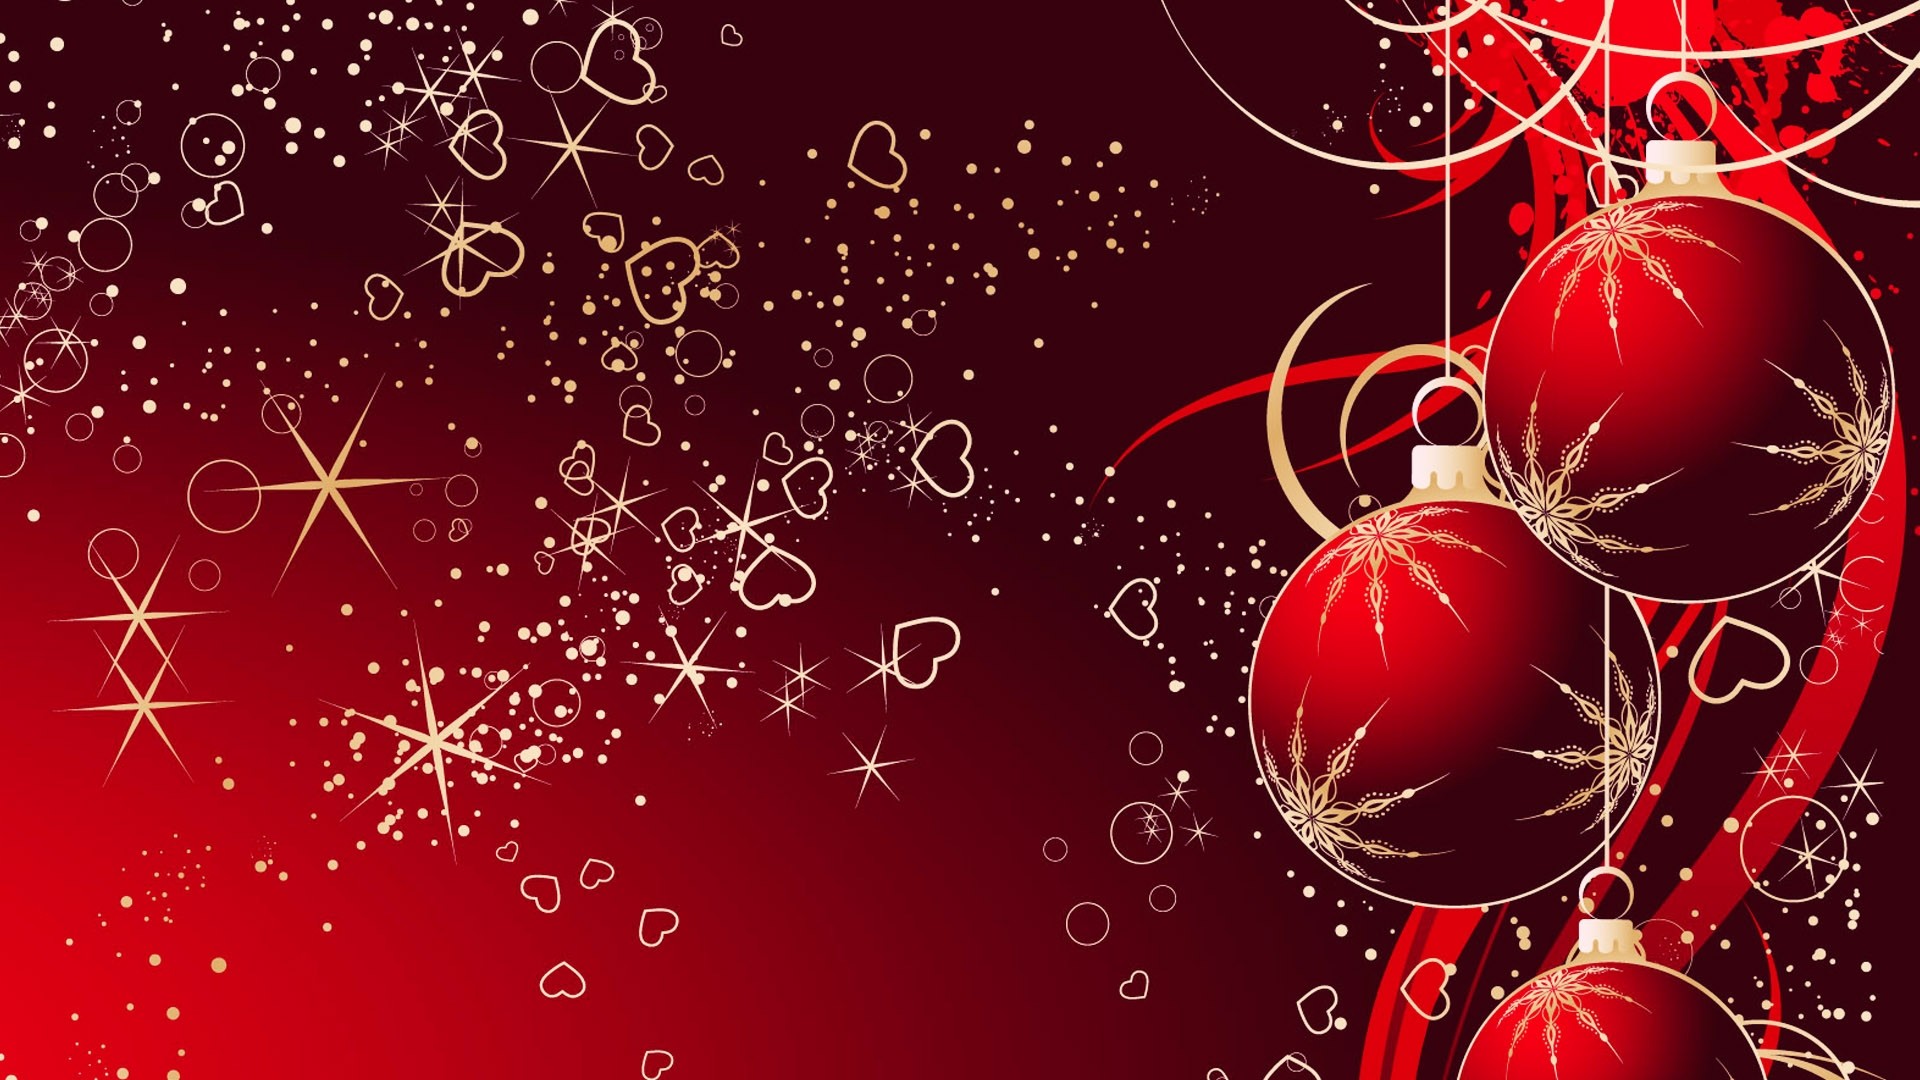 Beautiful HD Christmas Wallpaper Image